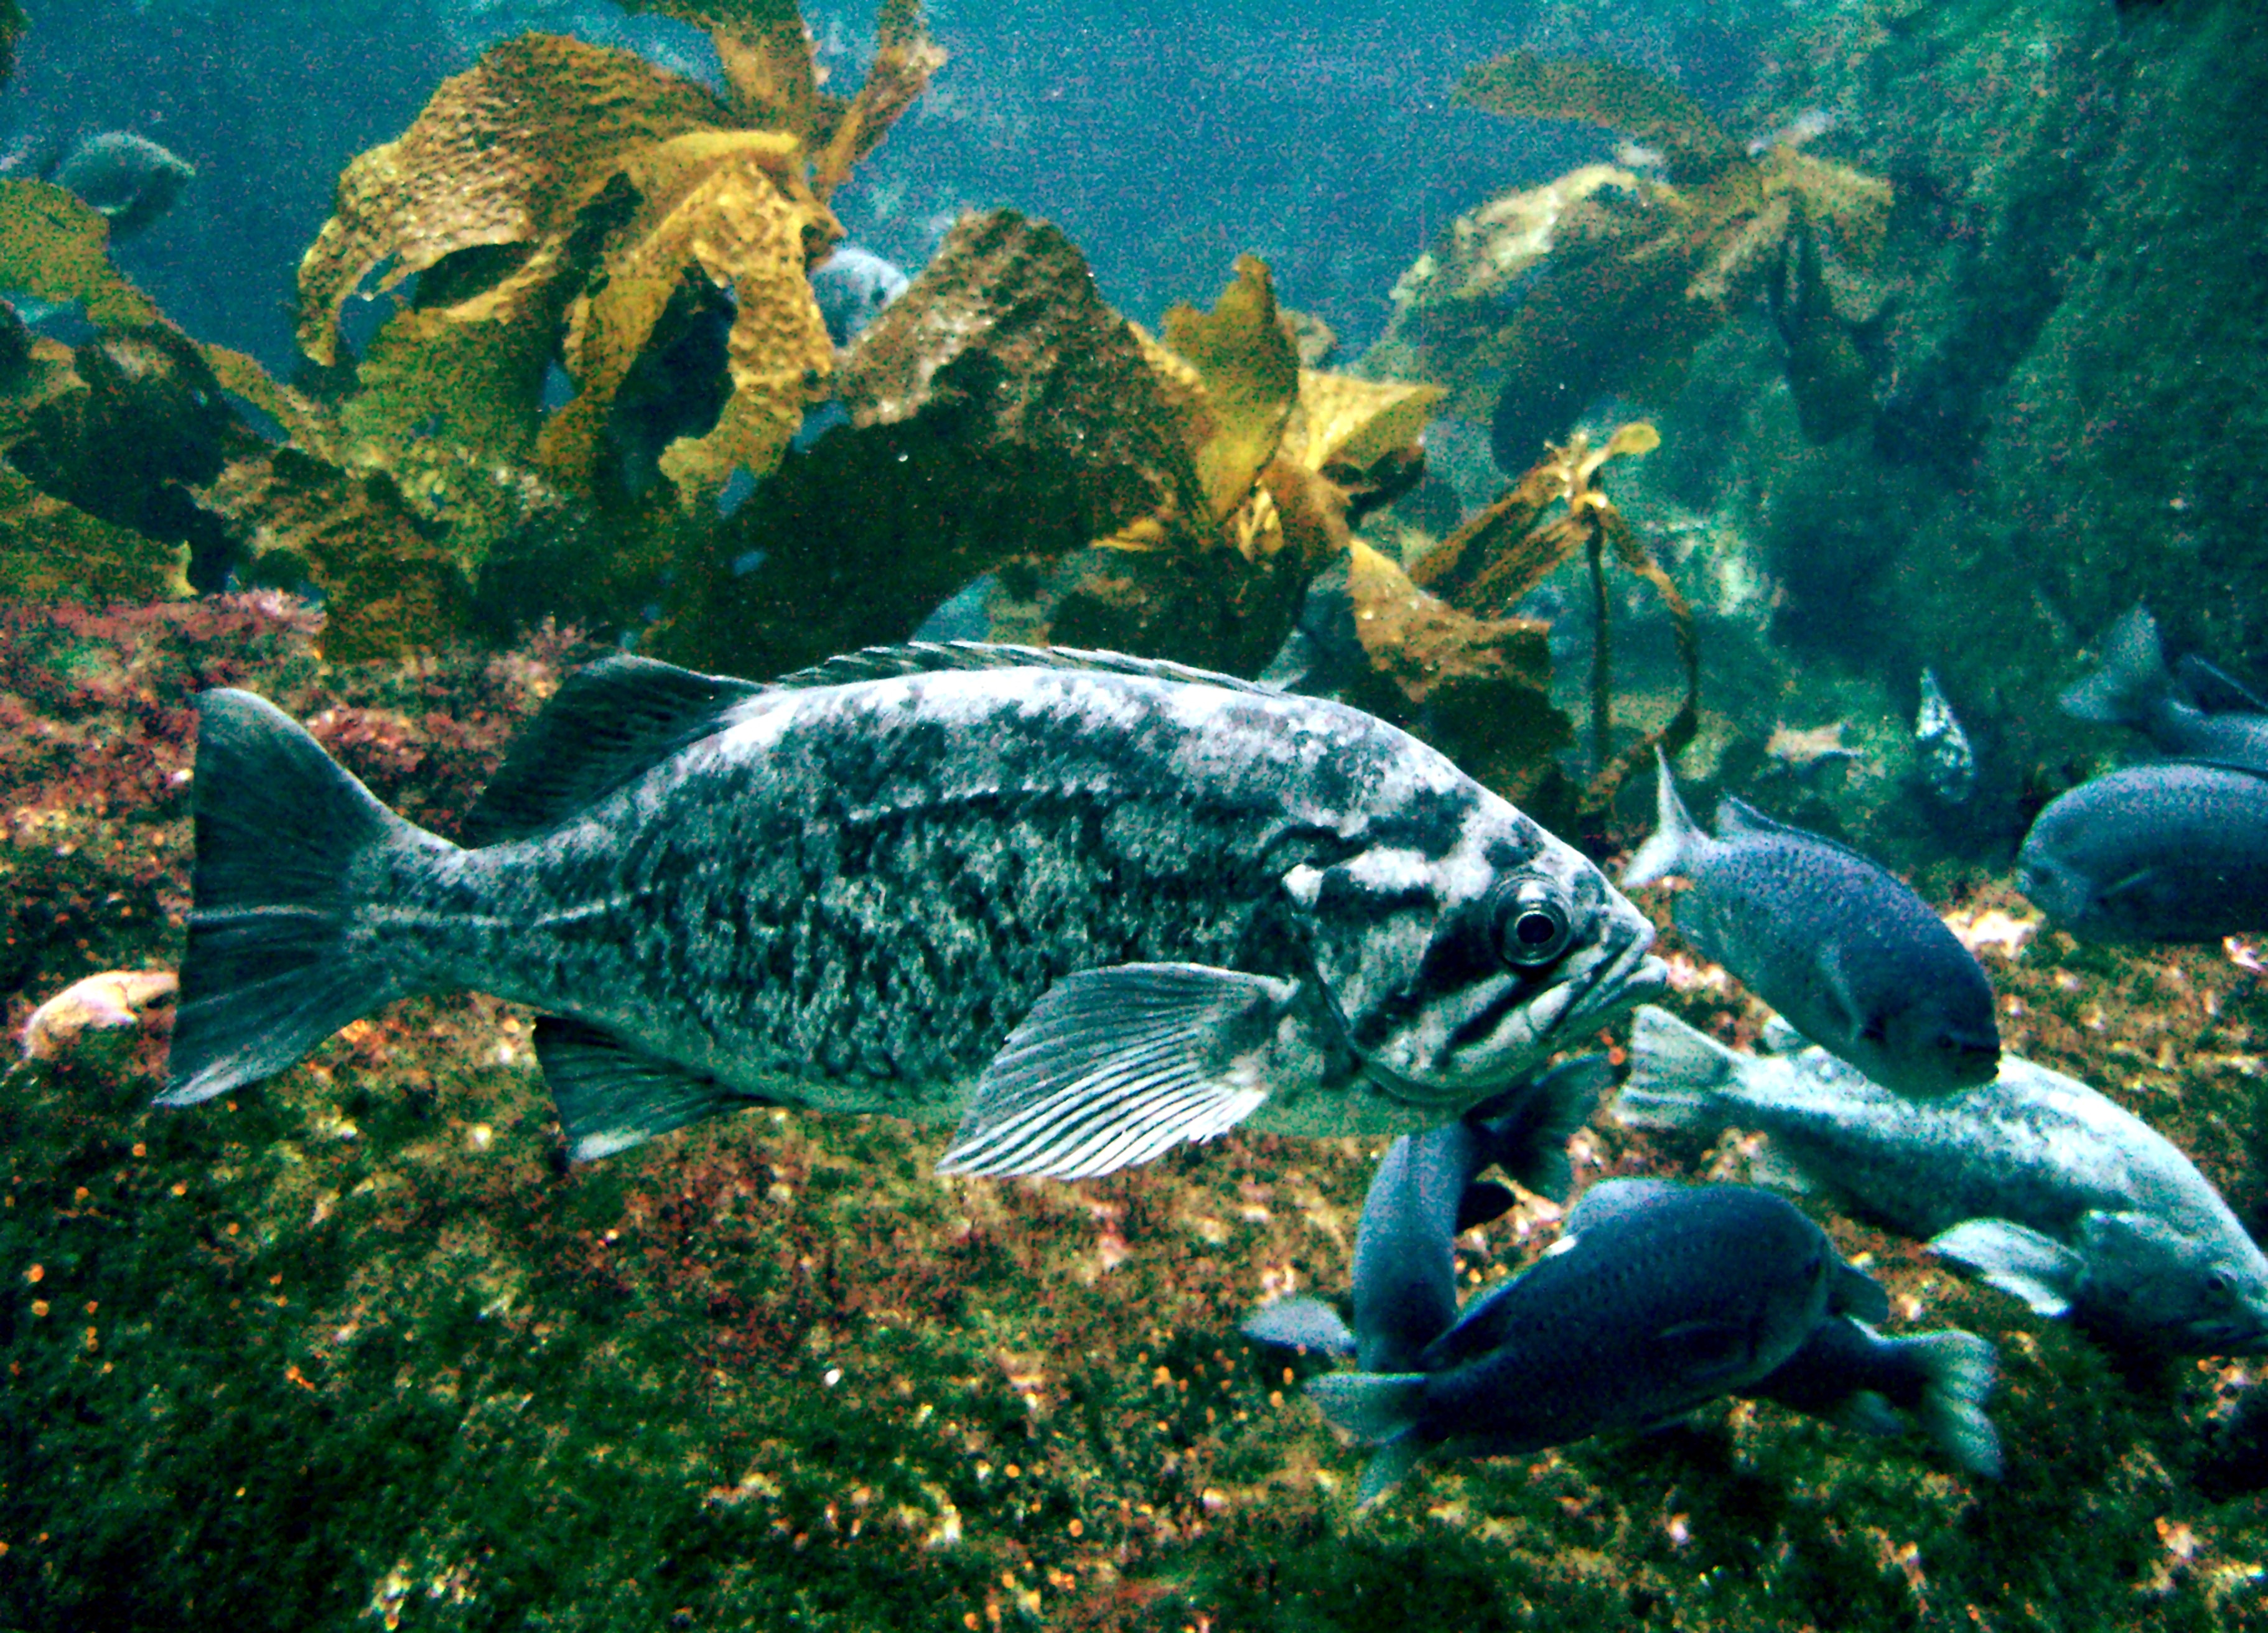 File:Rockfish Monterey Bay Aquarium.jpg - Wikipedia